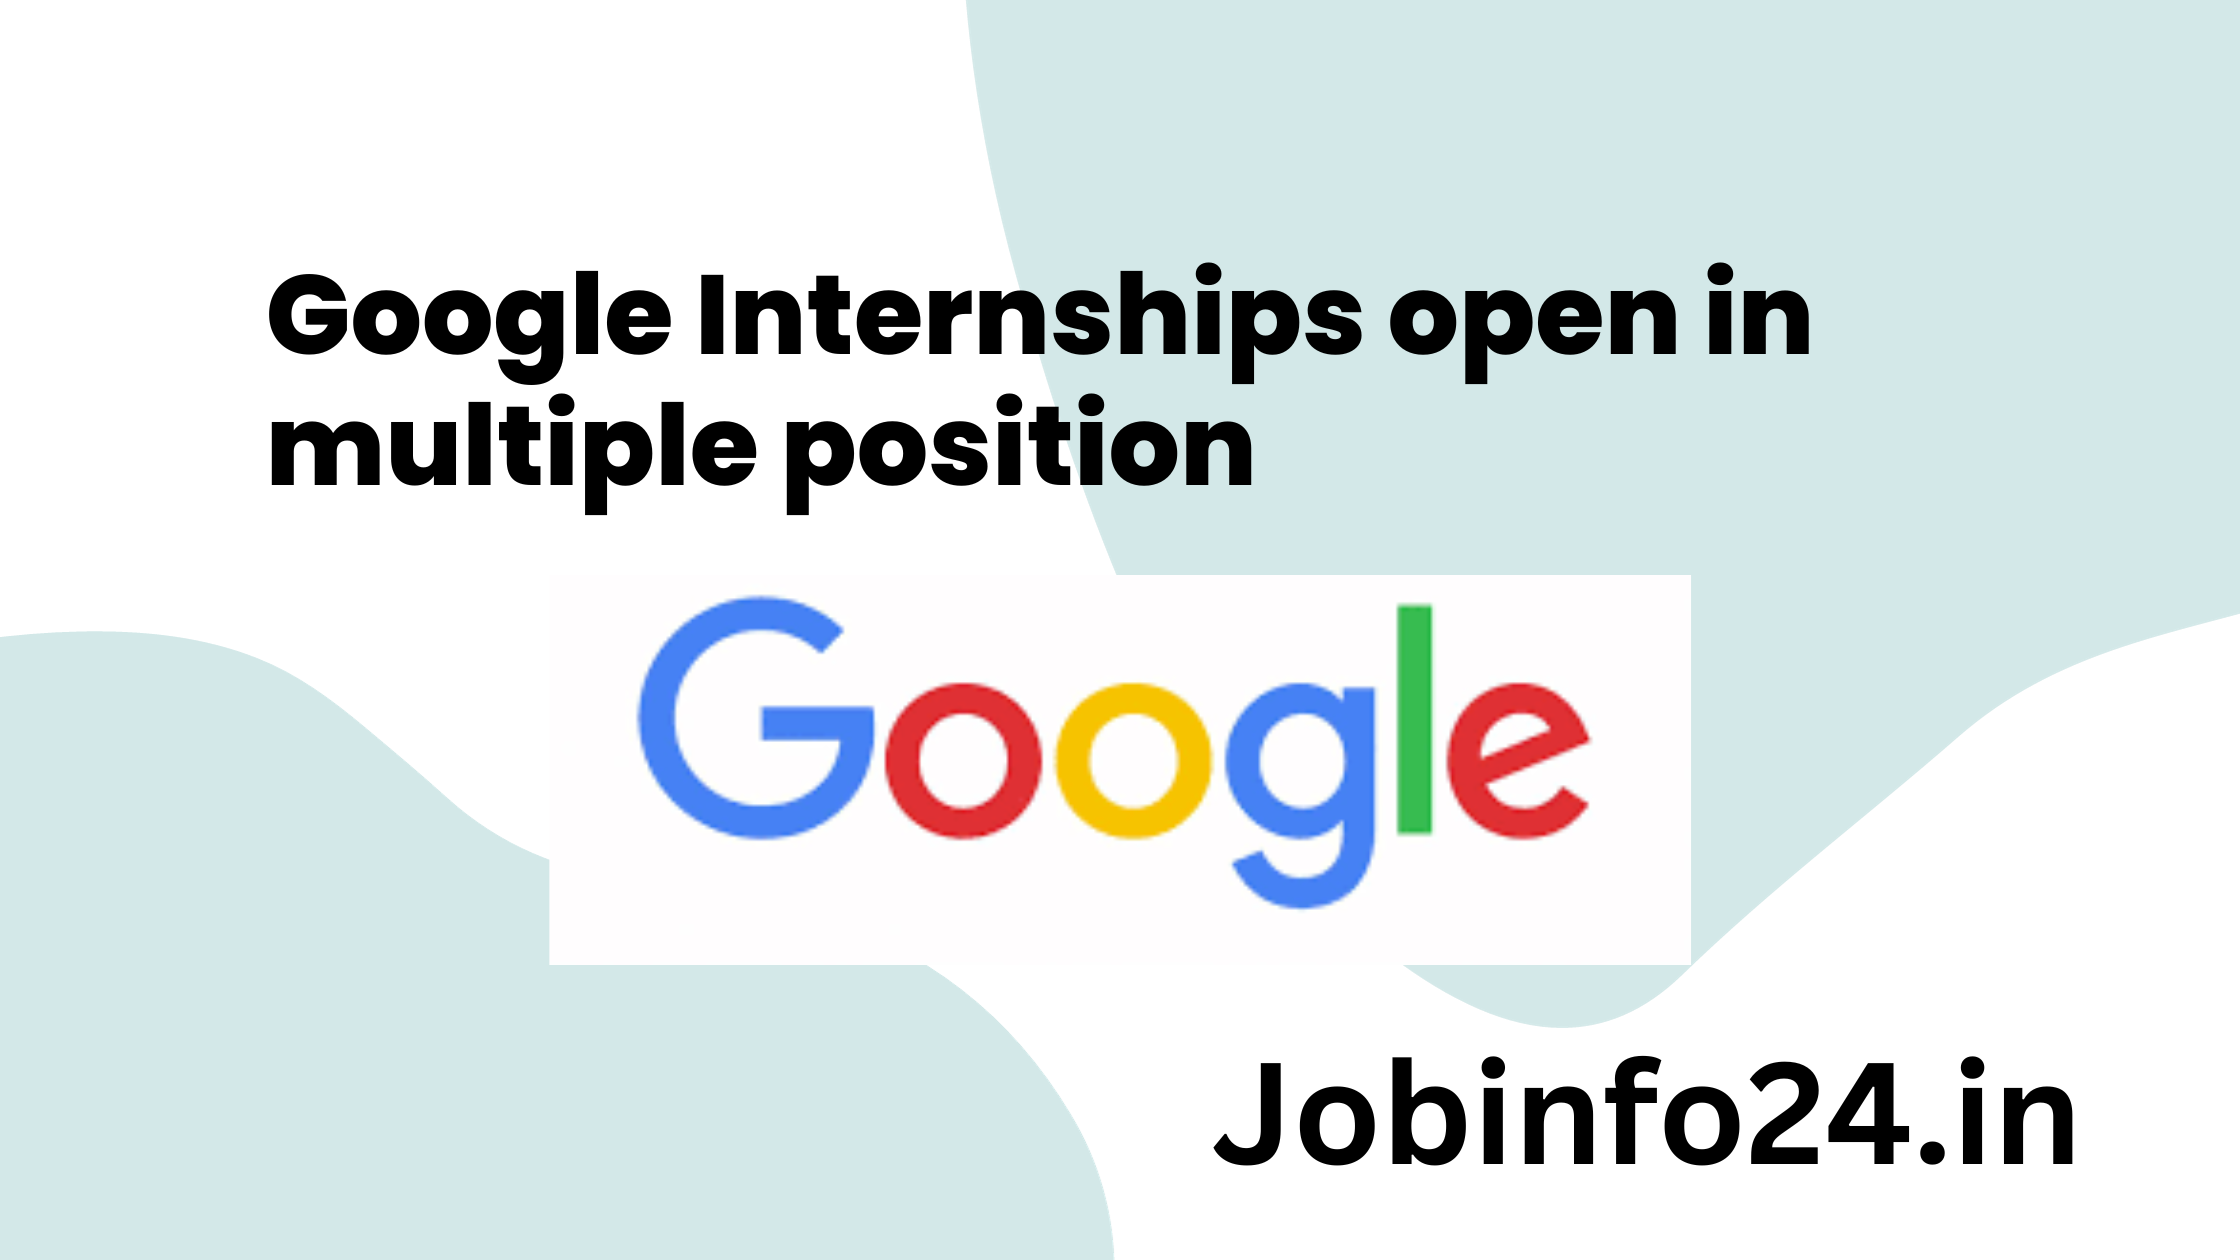 Google Internships open in multiple position